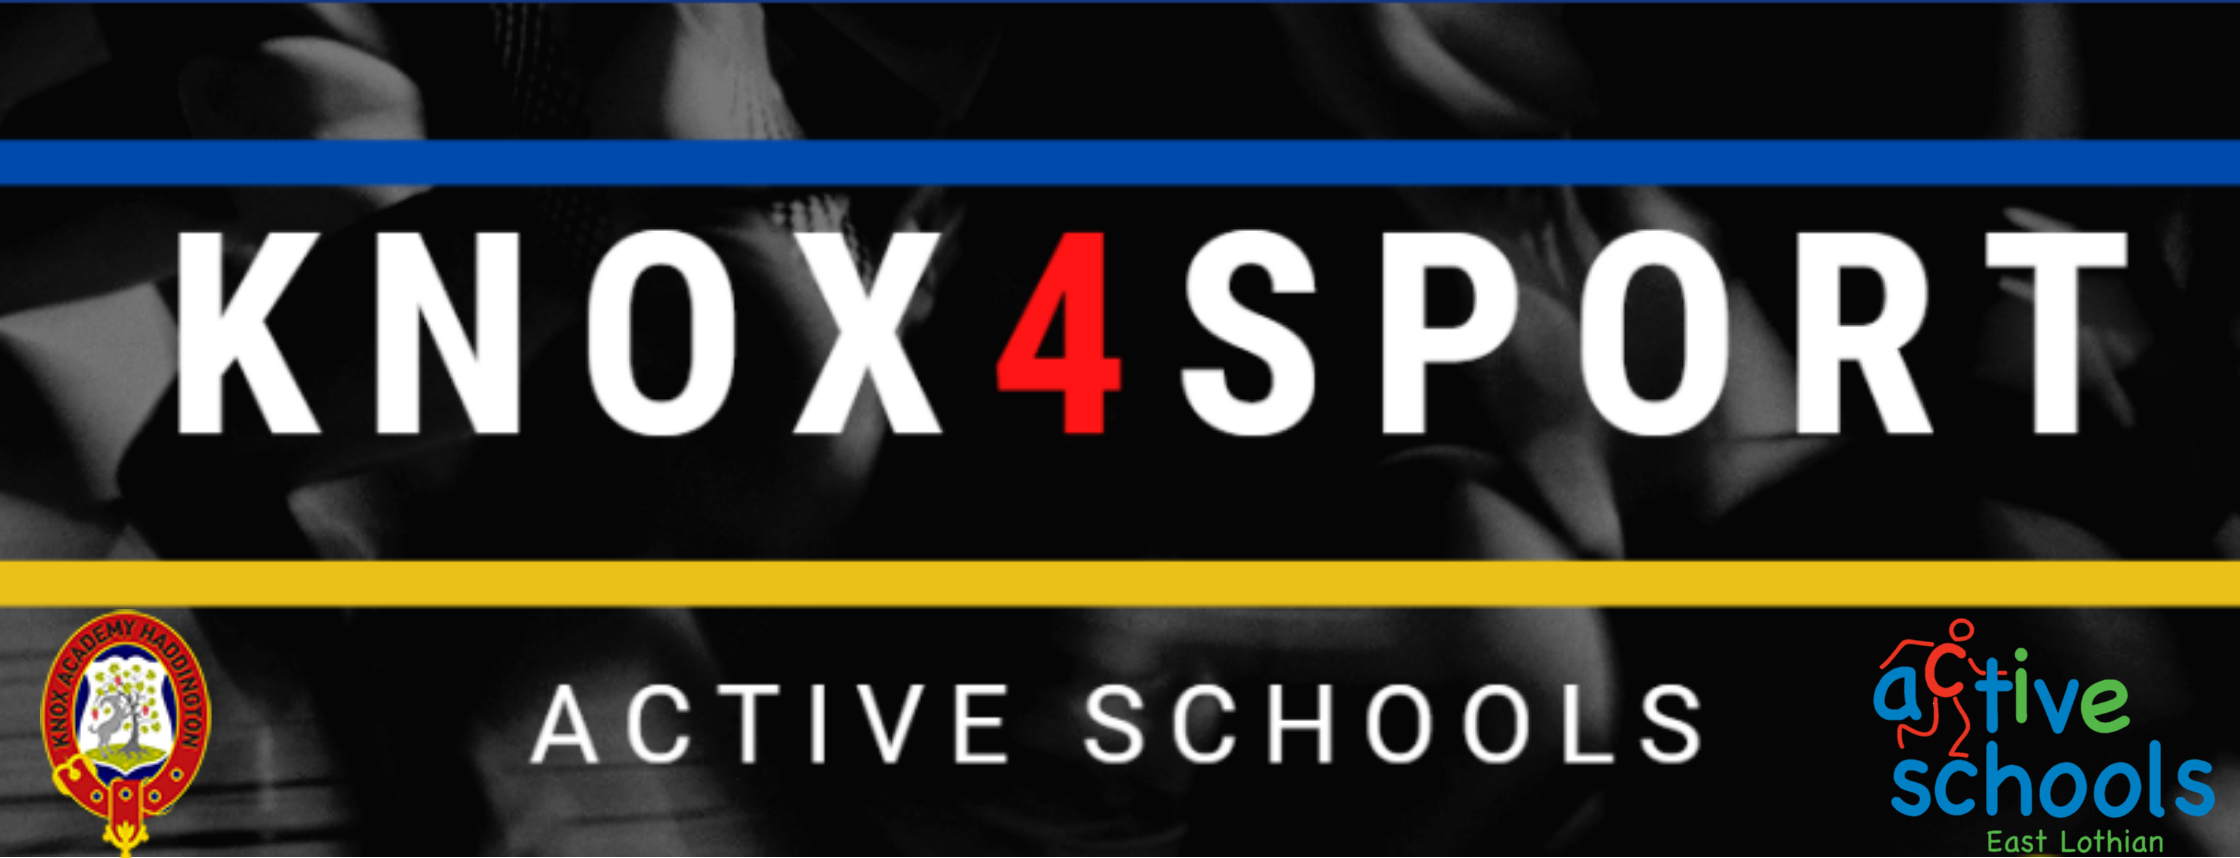 knox4sport active school11